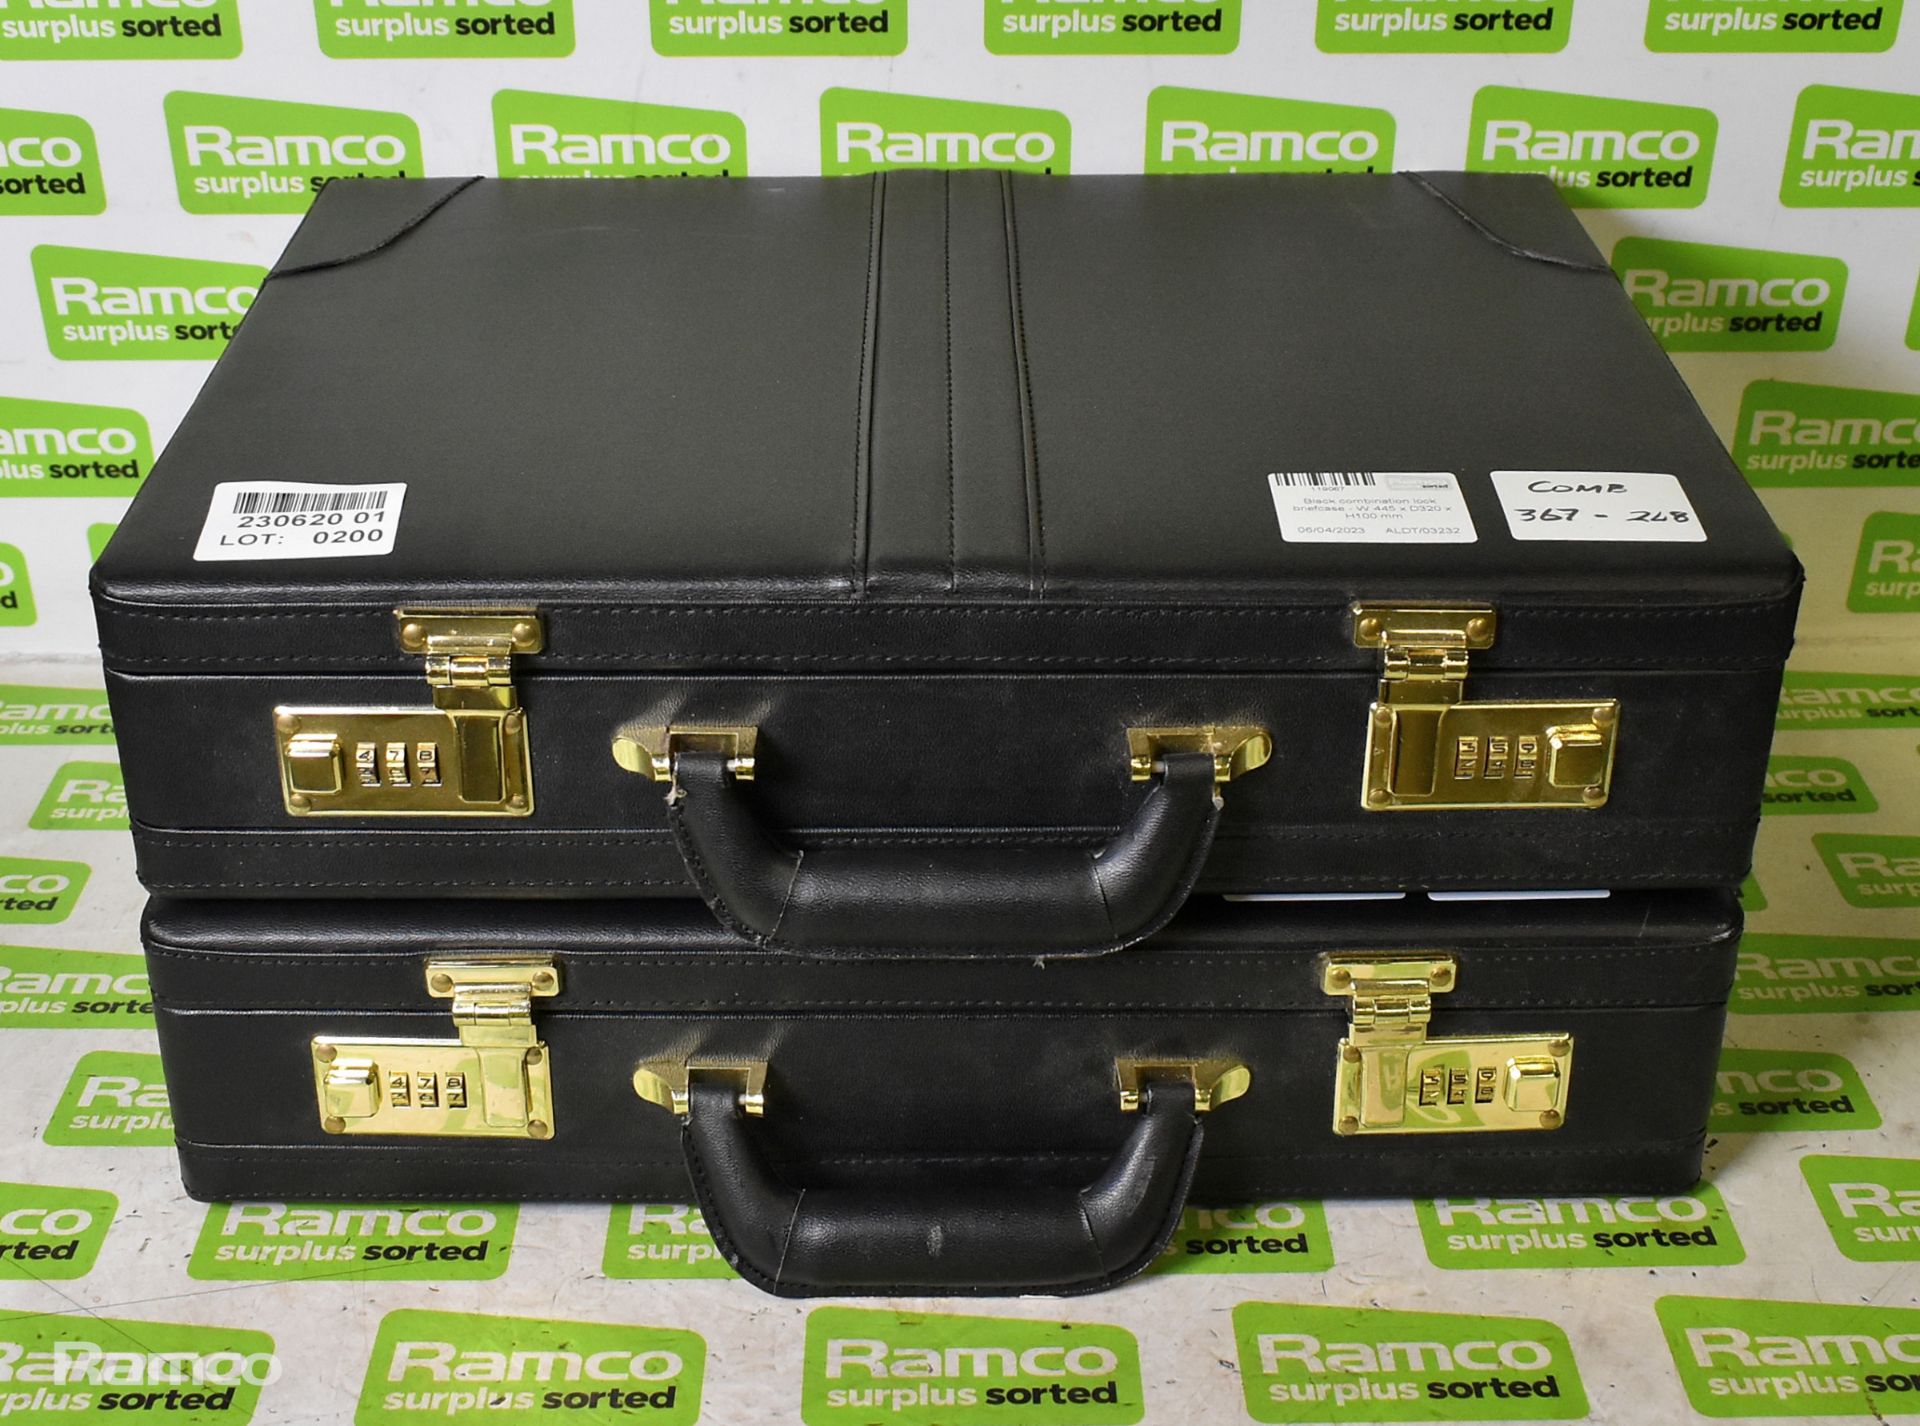 2x Black combination lock briefcases - W 445 x D320 x H100 mm